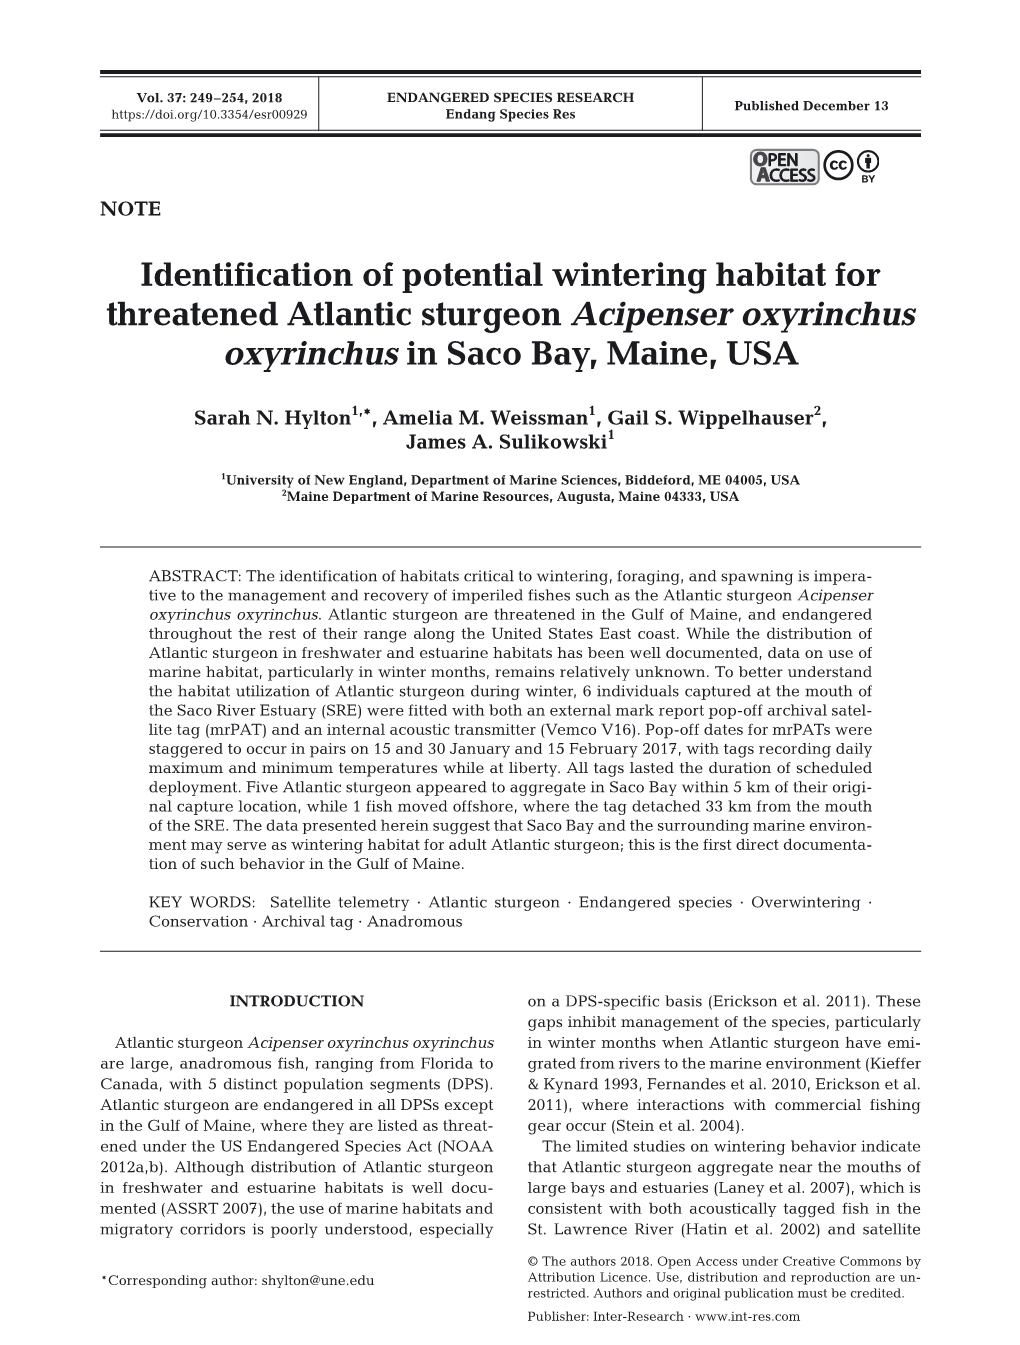 Identification of Potential Wintering Habitat for Threatened Atlantic Sturgeon Acipenser Oxyrinchus Oxyrinchus in Saco Bay, Maine, USA